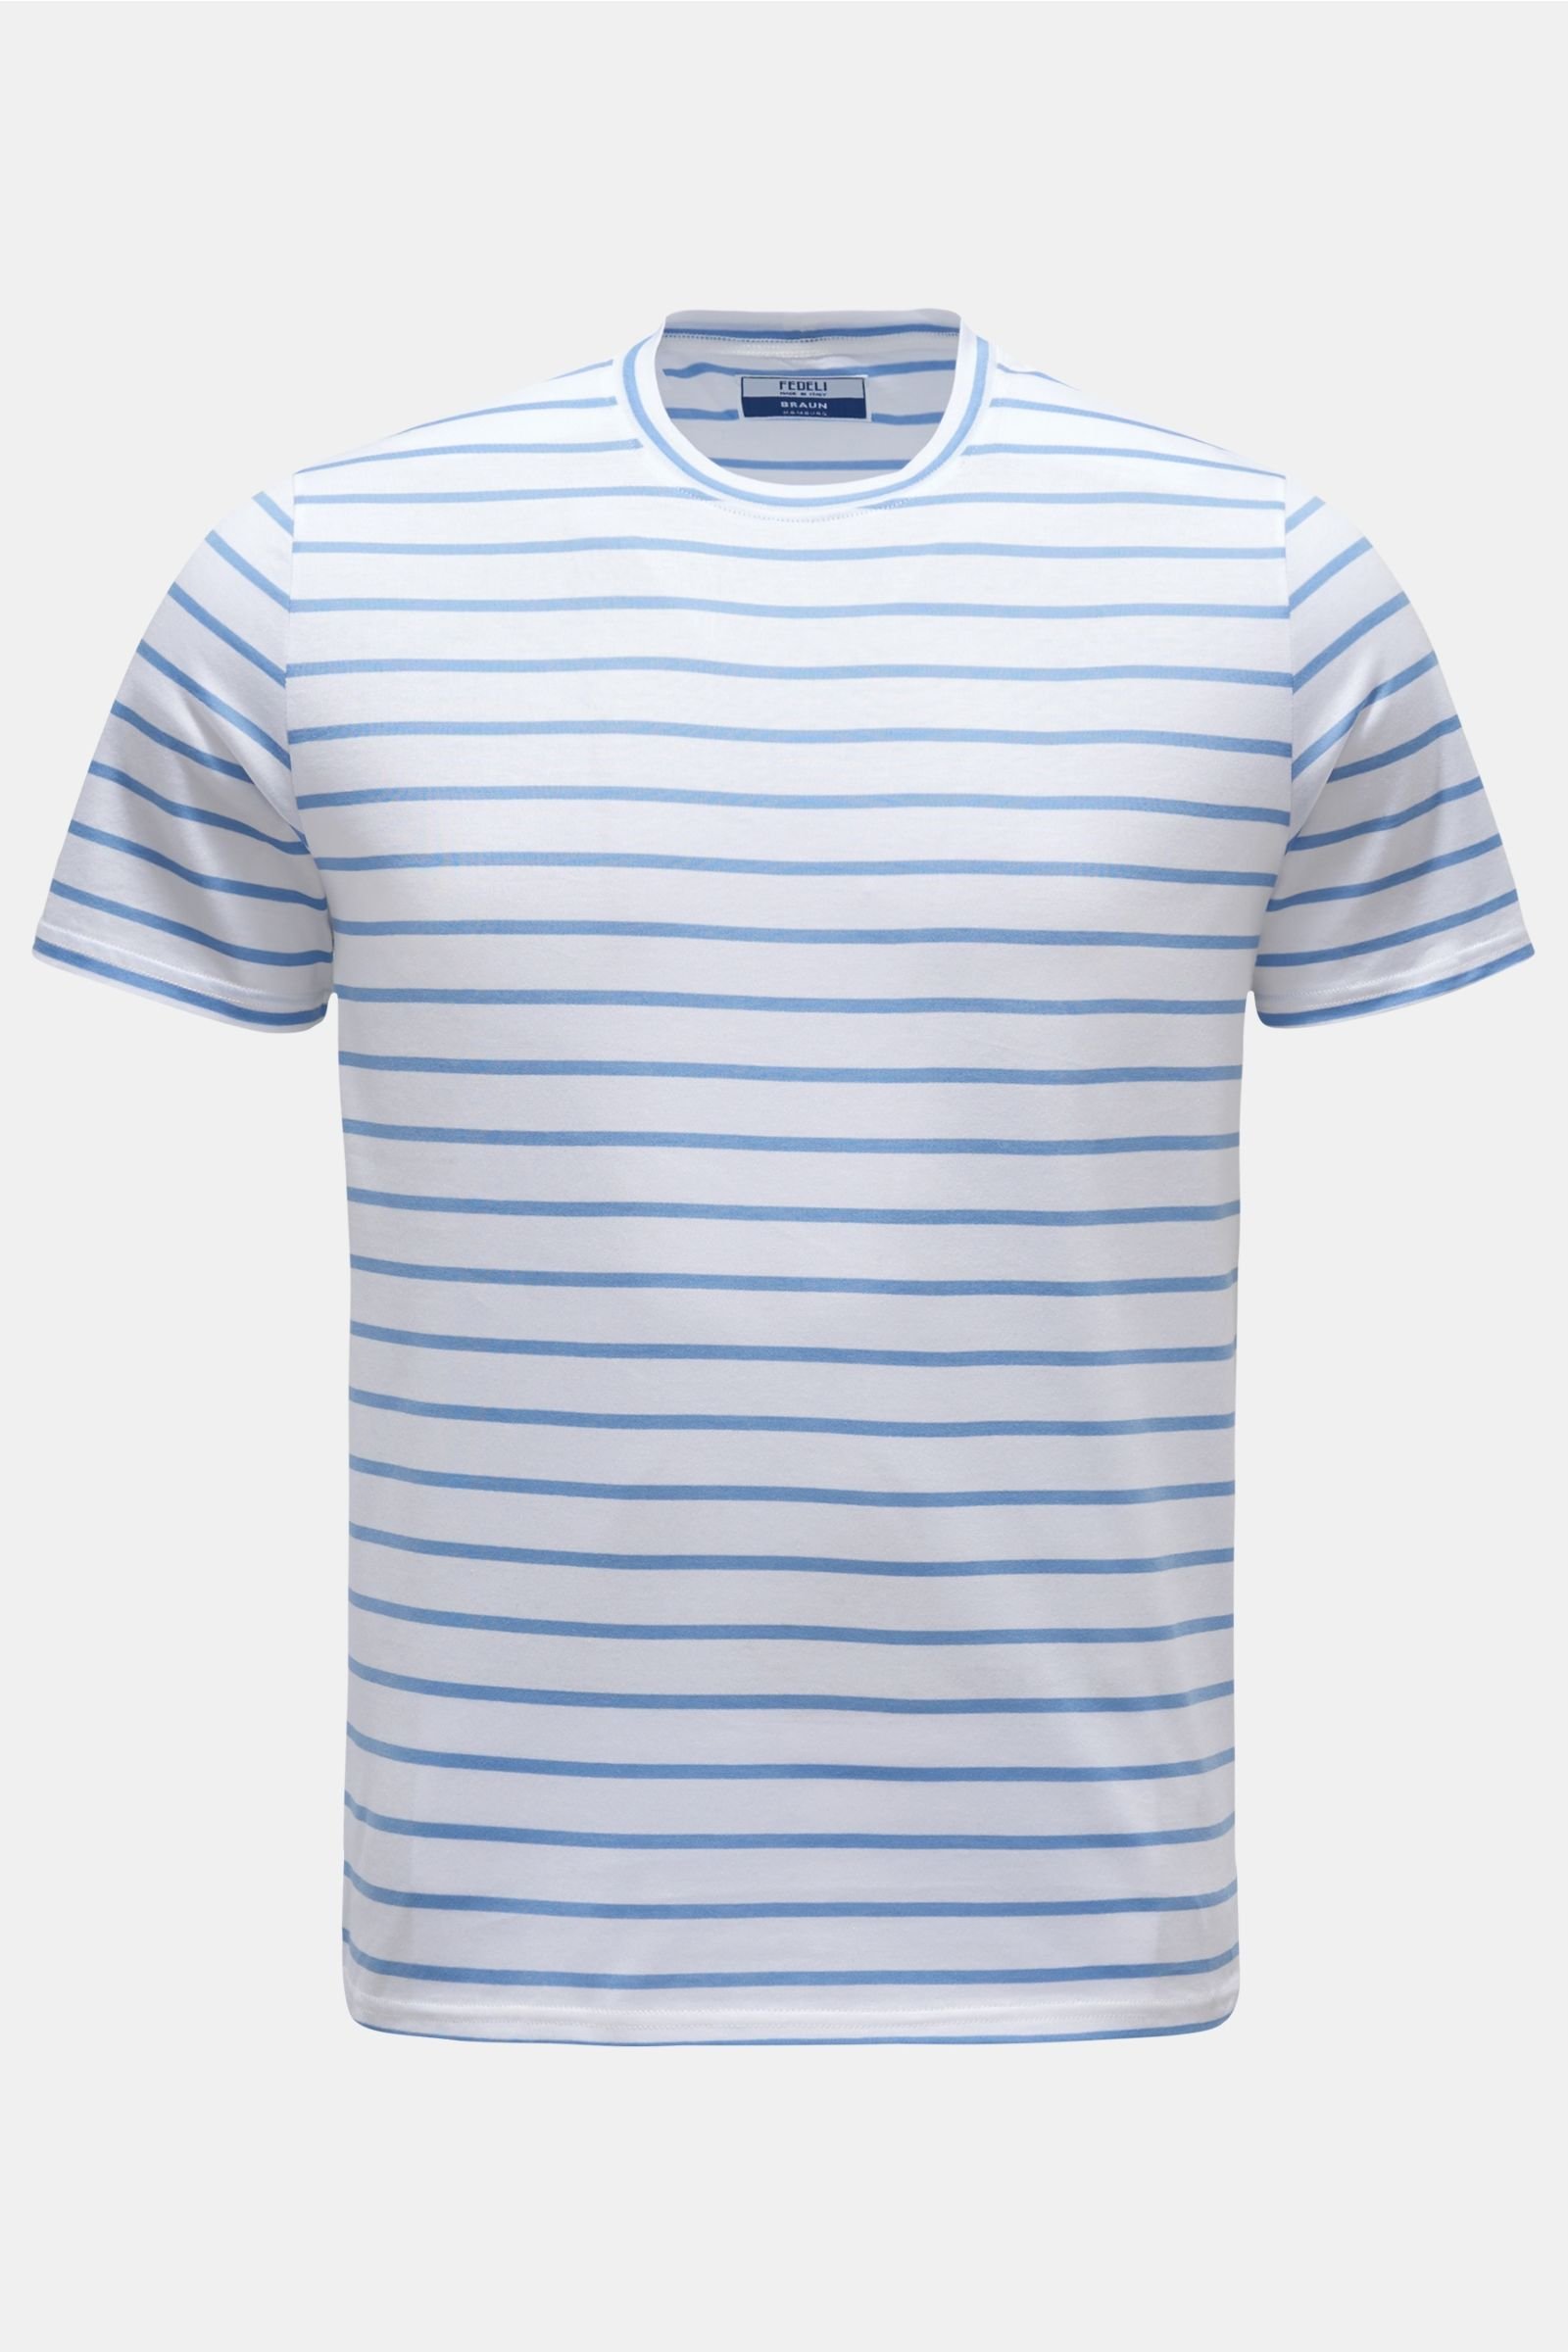 Crew neck T-shirt 'Gary' grey-blue/white striped